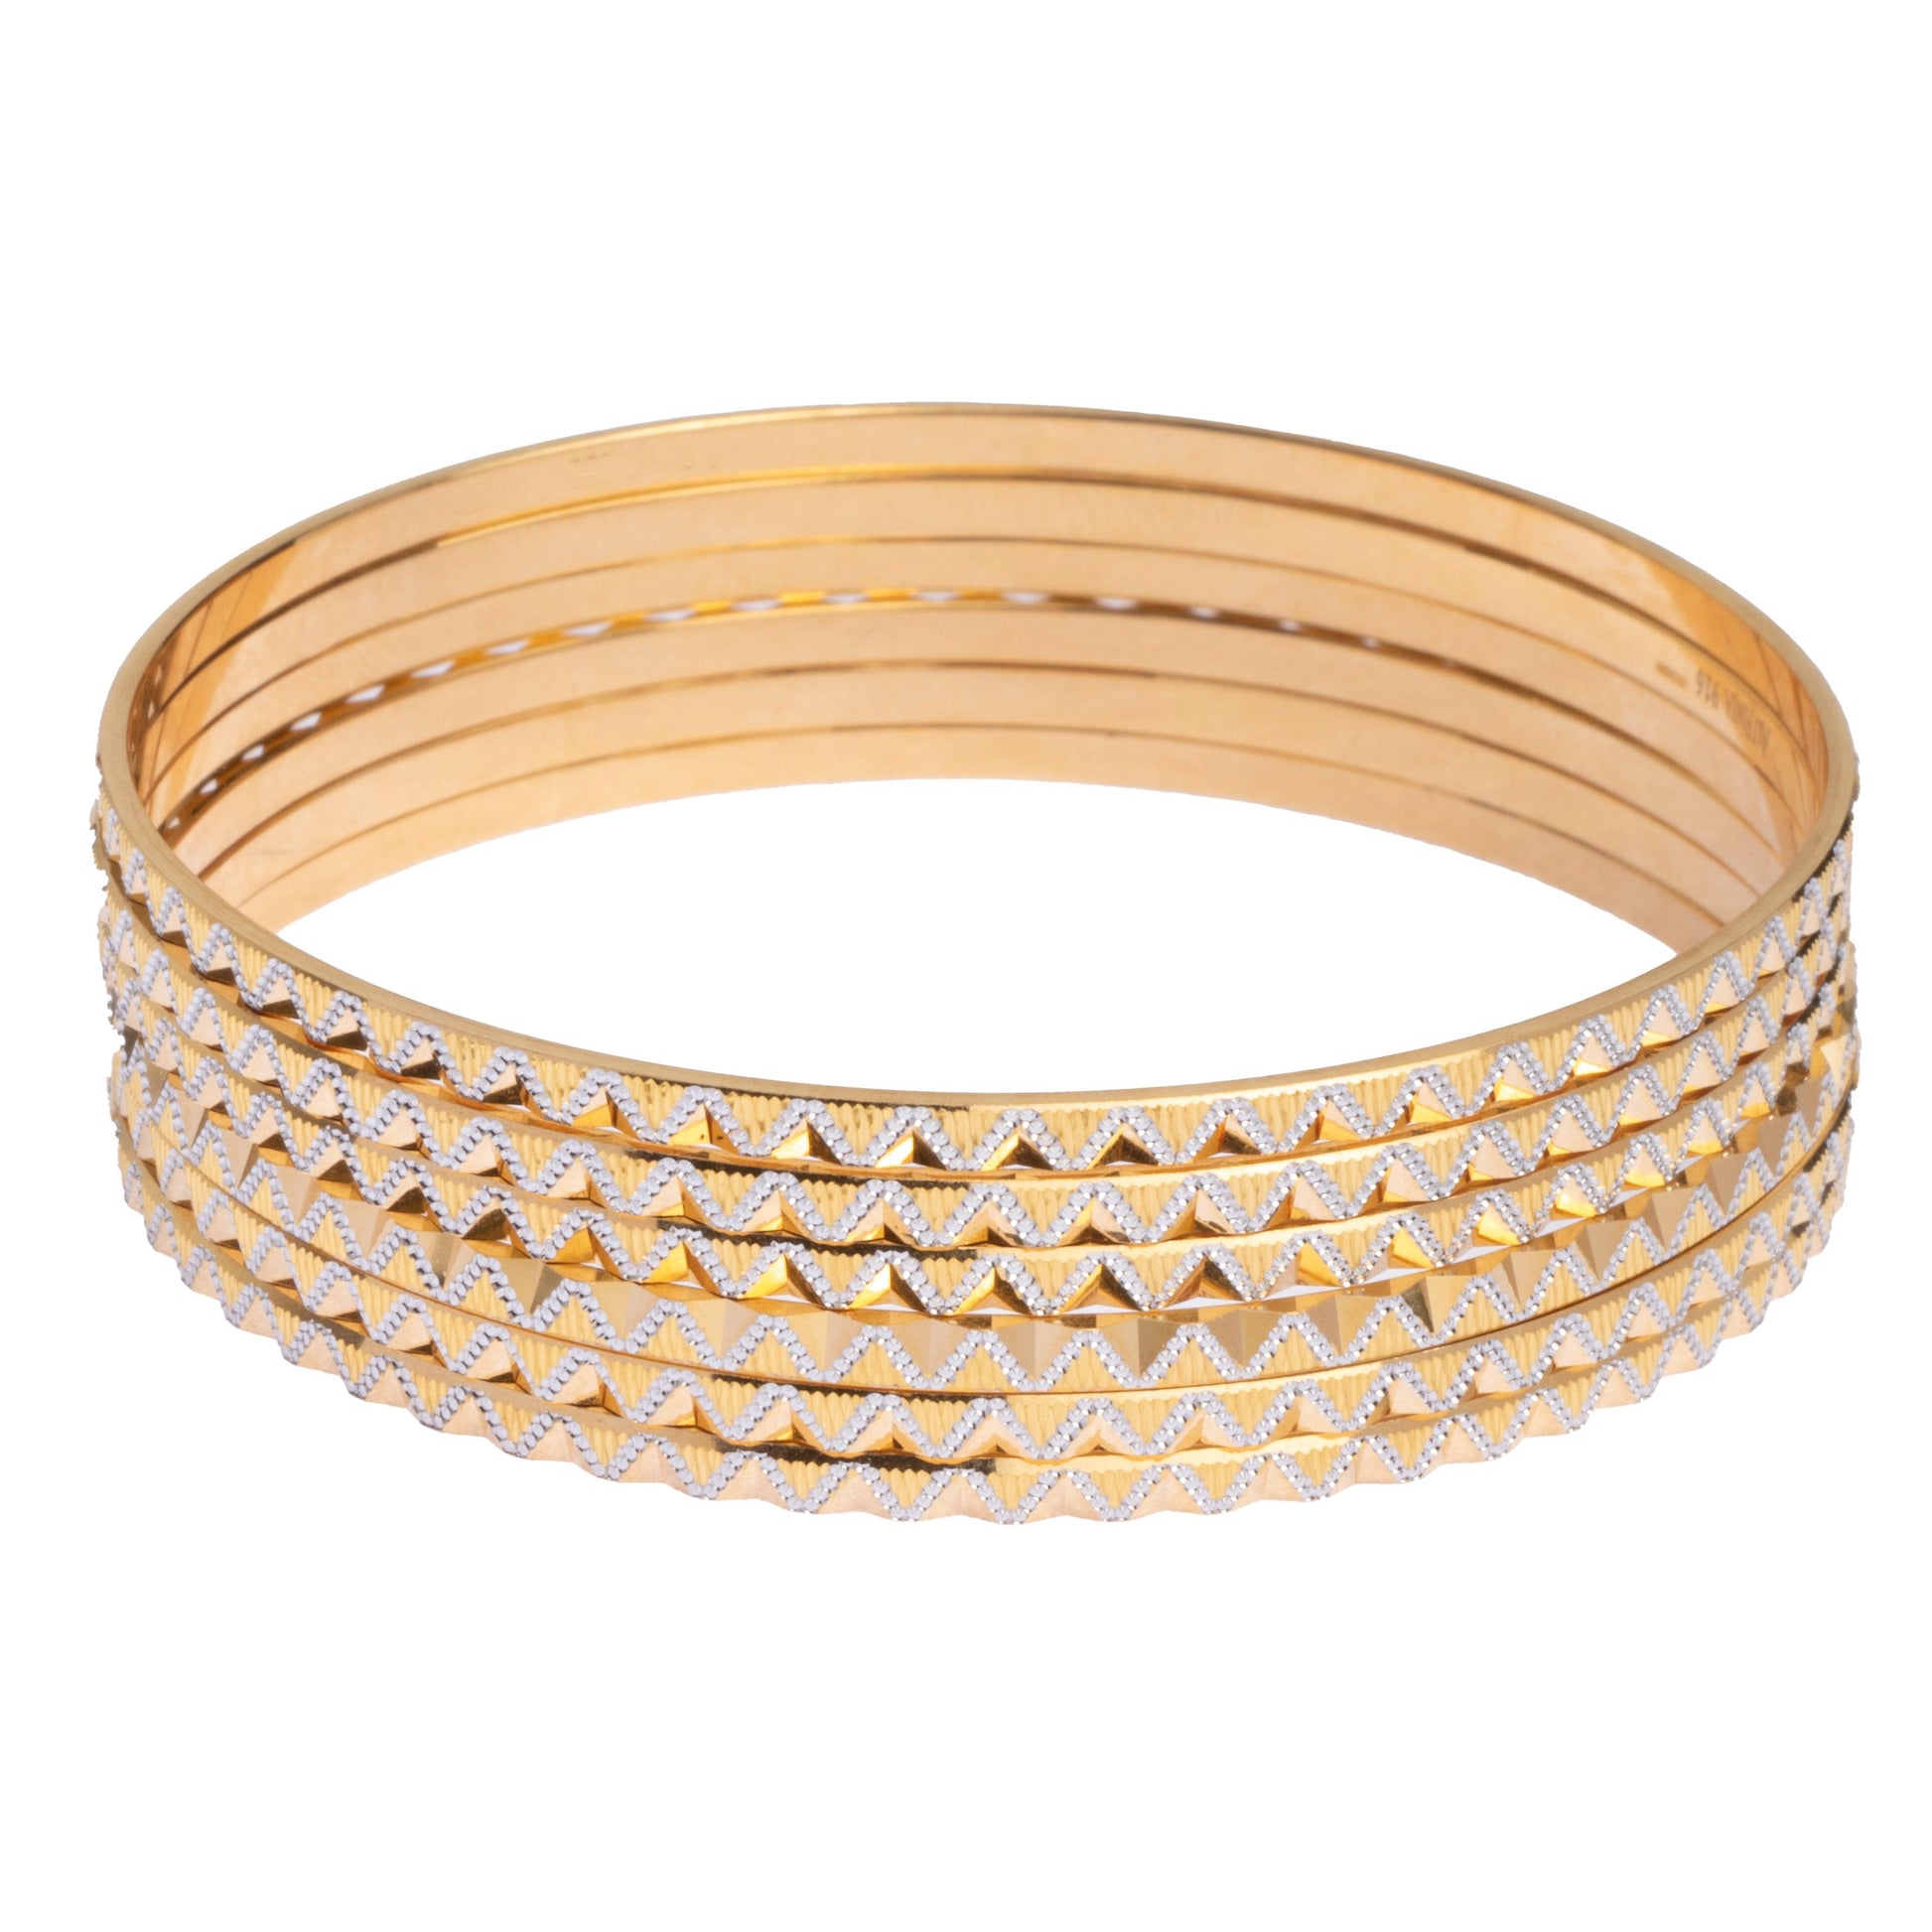 Set of Six 22ct Gold Bangles with Rhodium and Diamond Cut Design (55.8g) B-8309 - Minar Jewellers